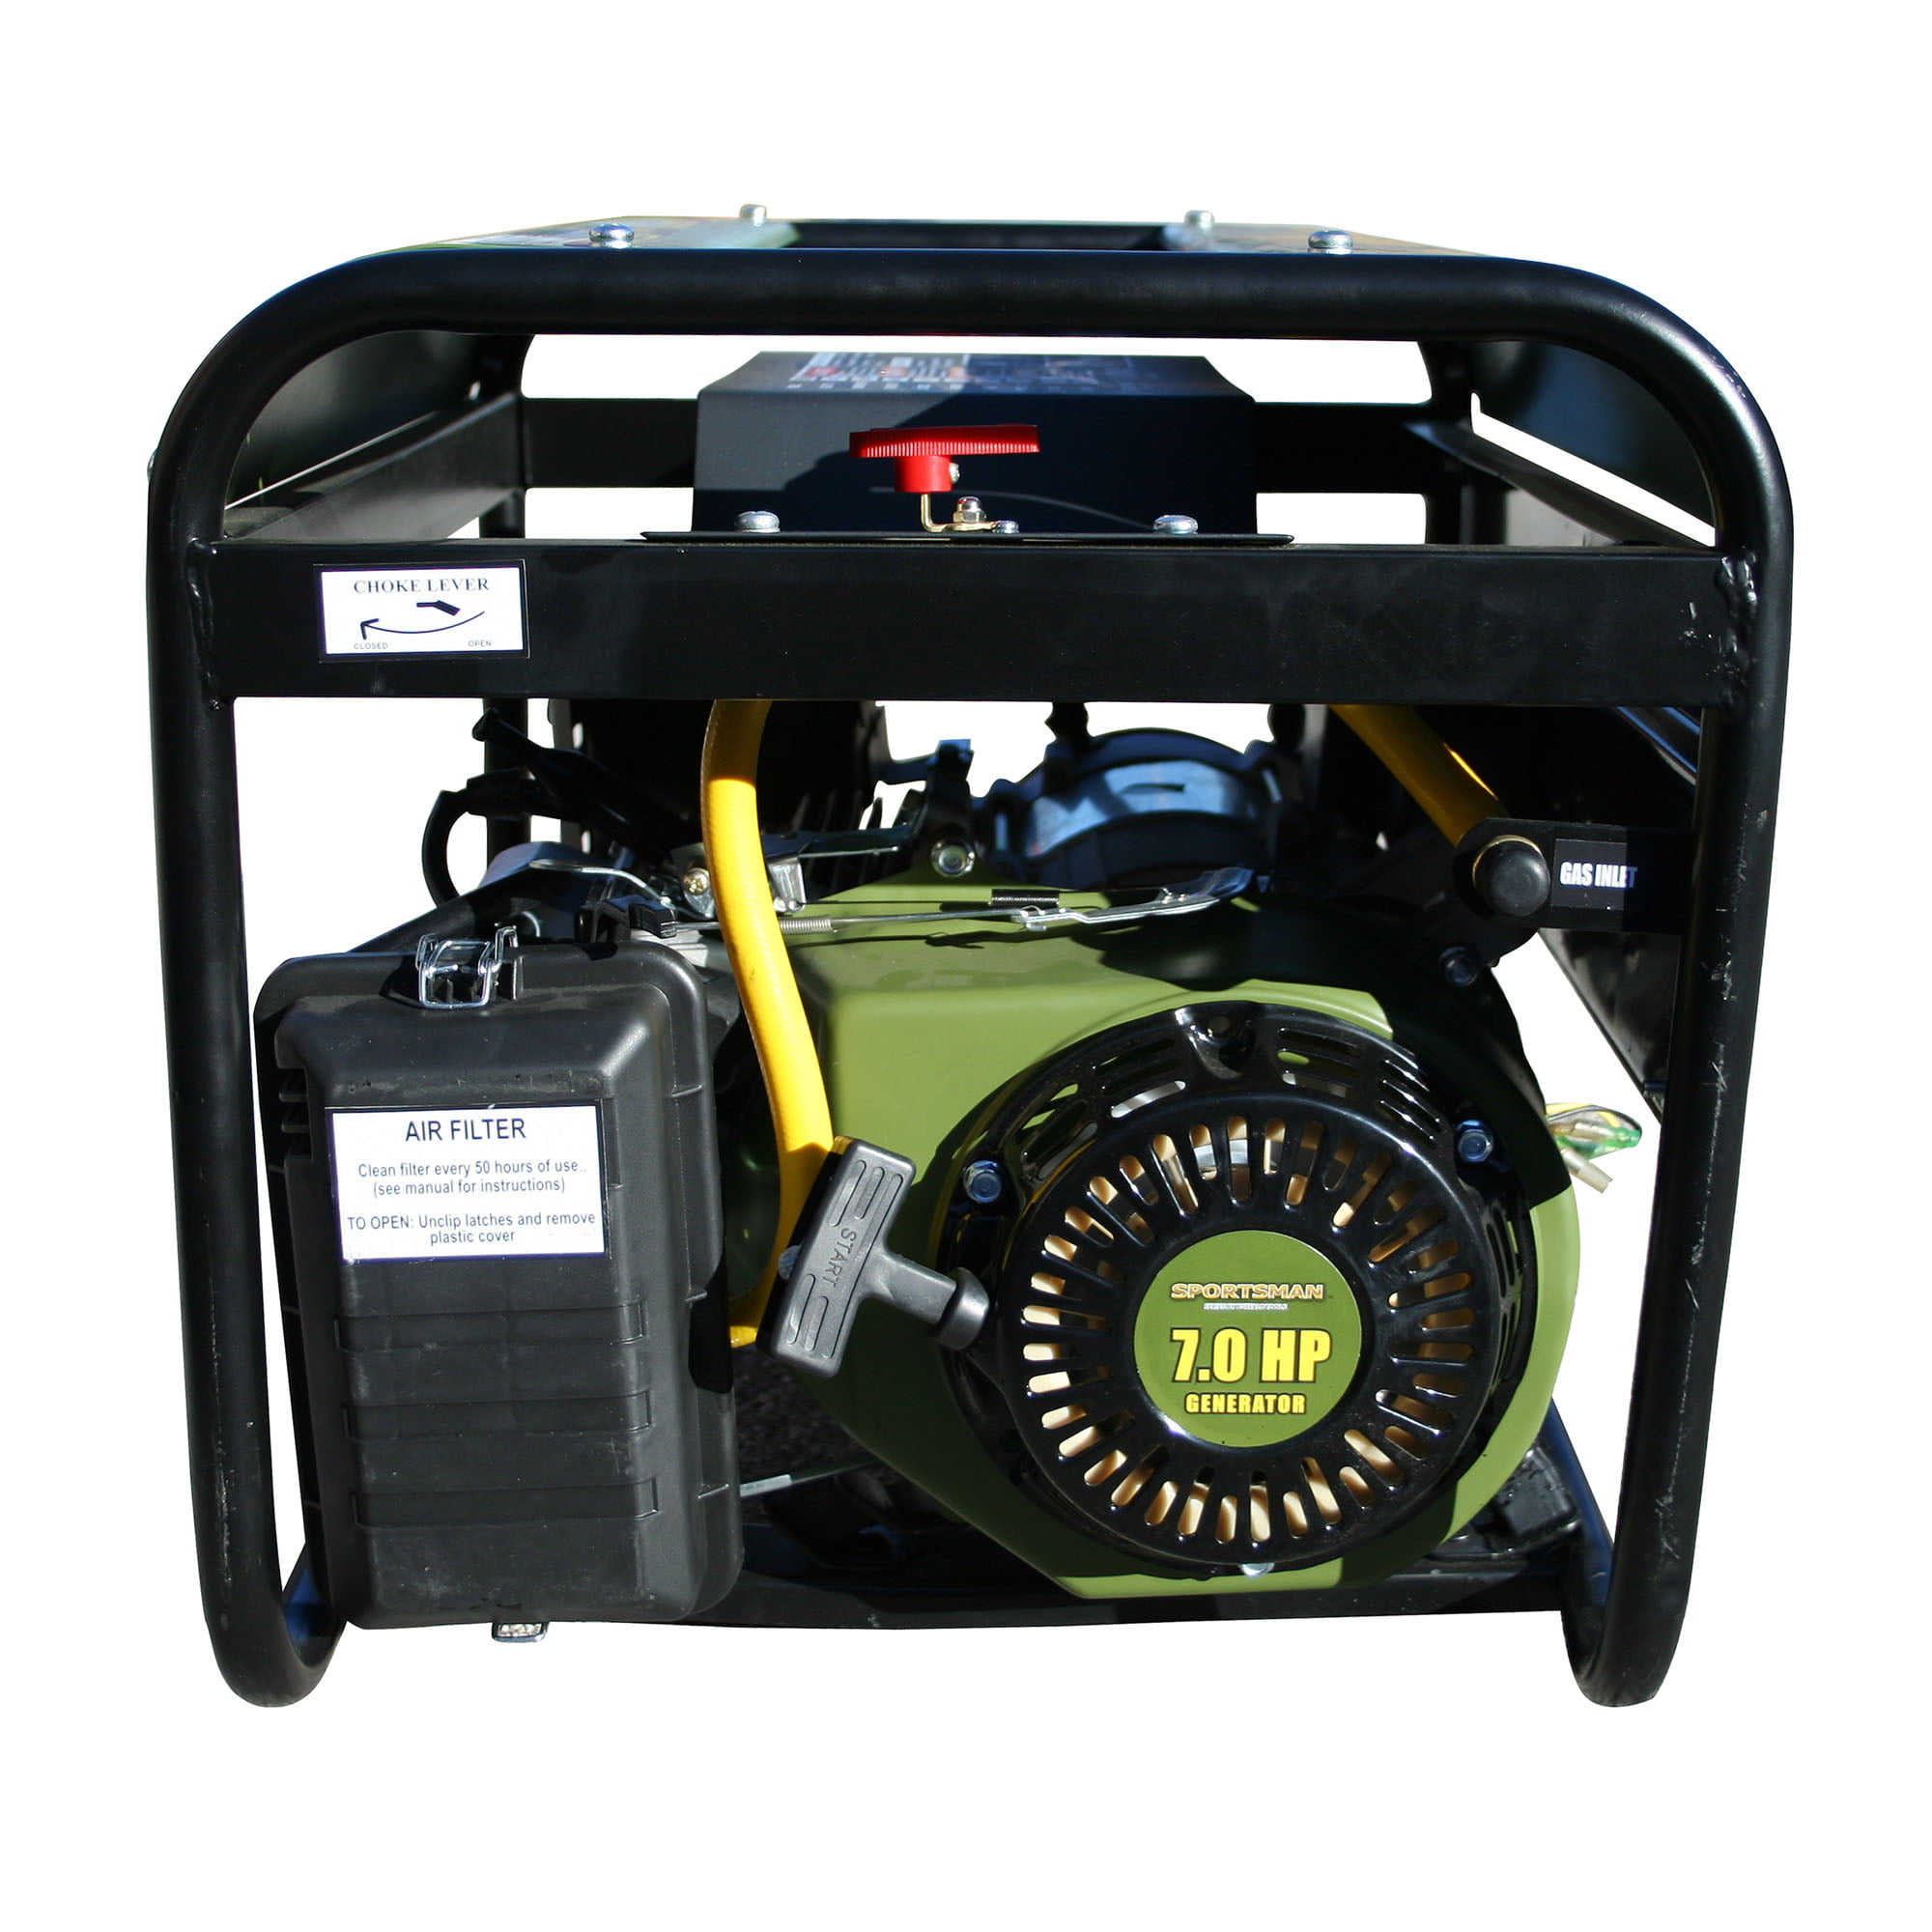 3250 Running Watts/4000 Starting Watts Propane Powered Portable Generator Sportsman GEN4000LP 